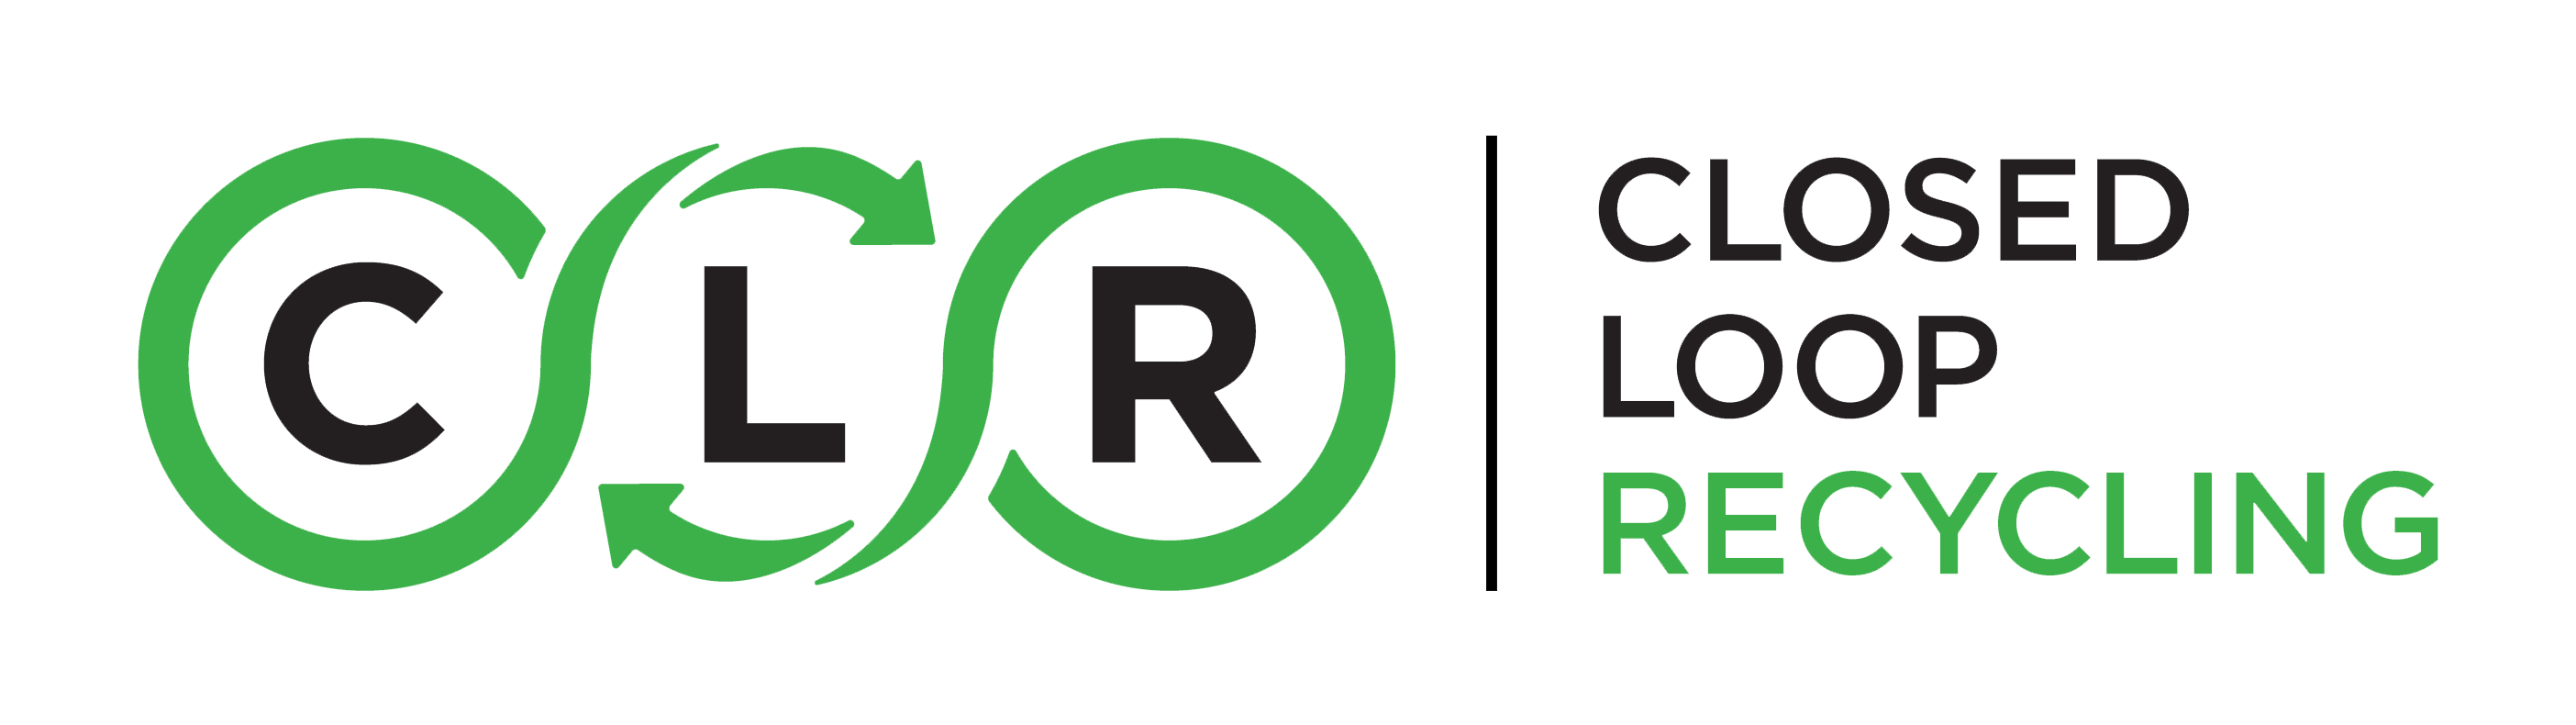 Closed Loop Recycling logo